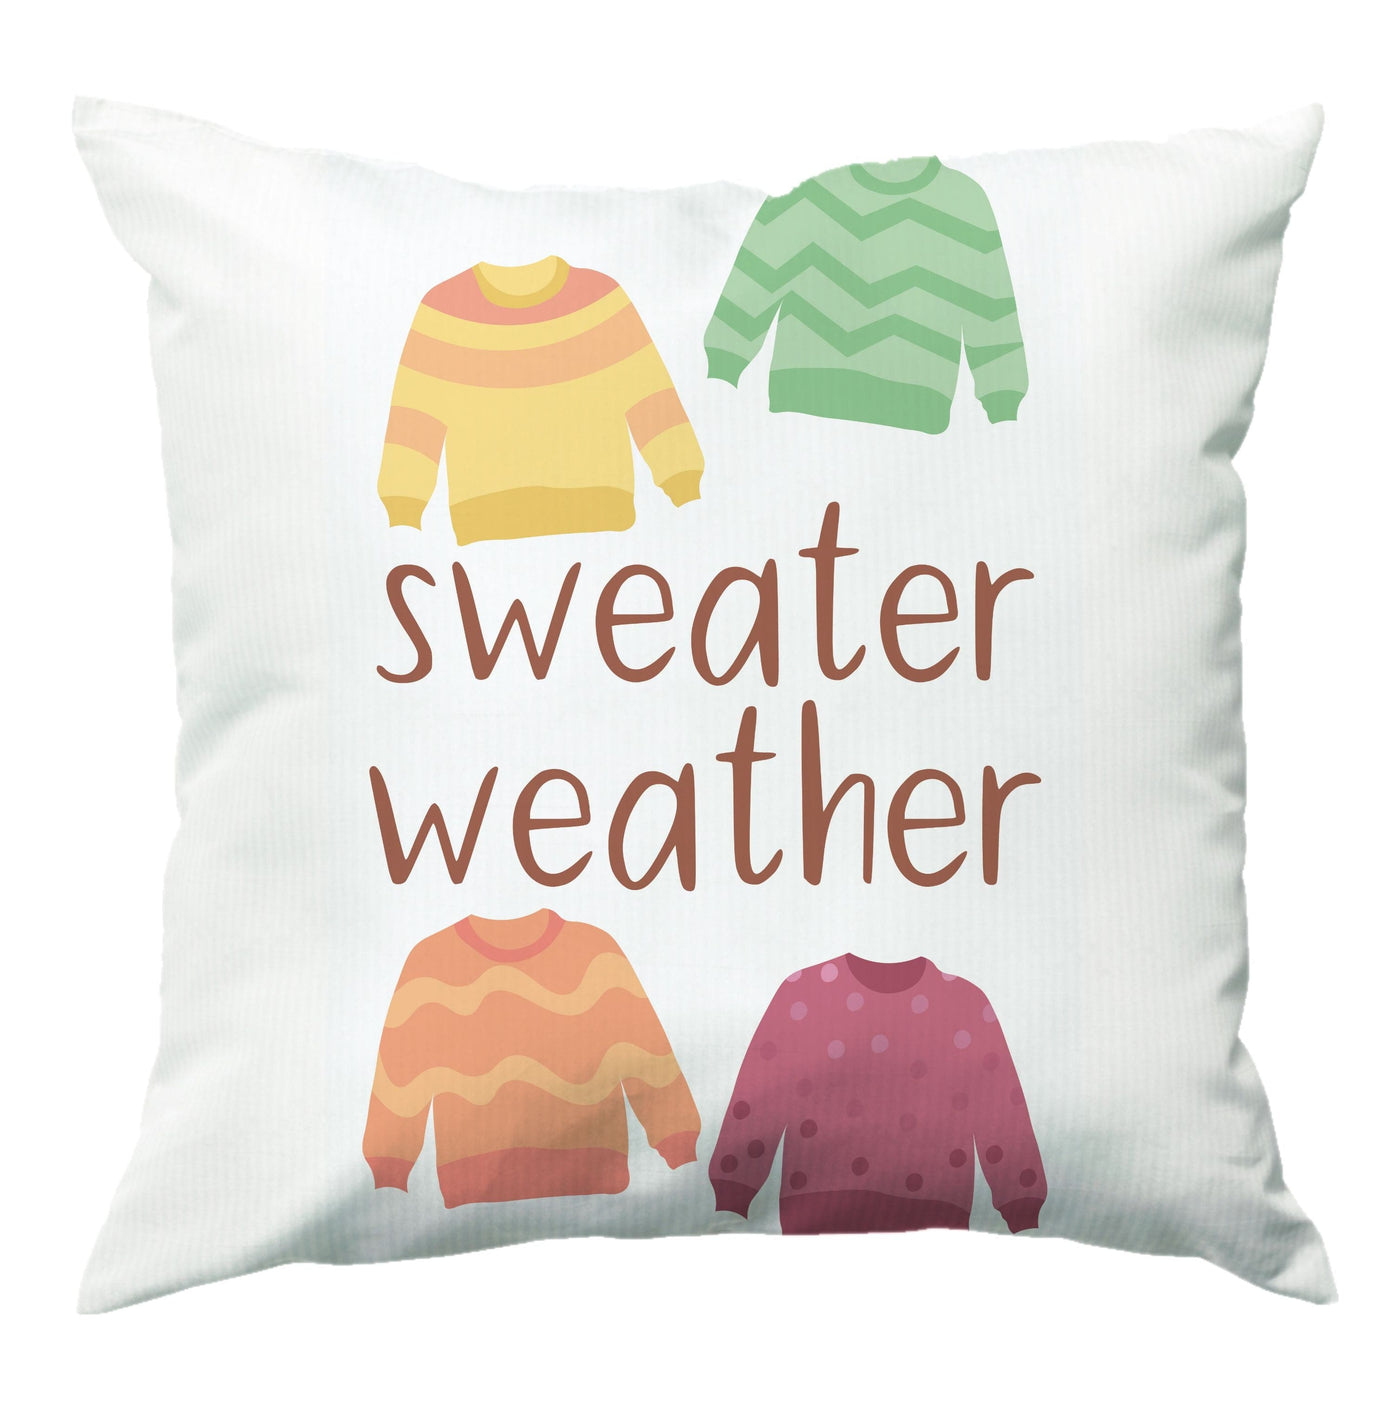 Sweater Weather - Autumn Cushion